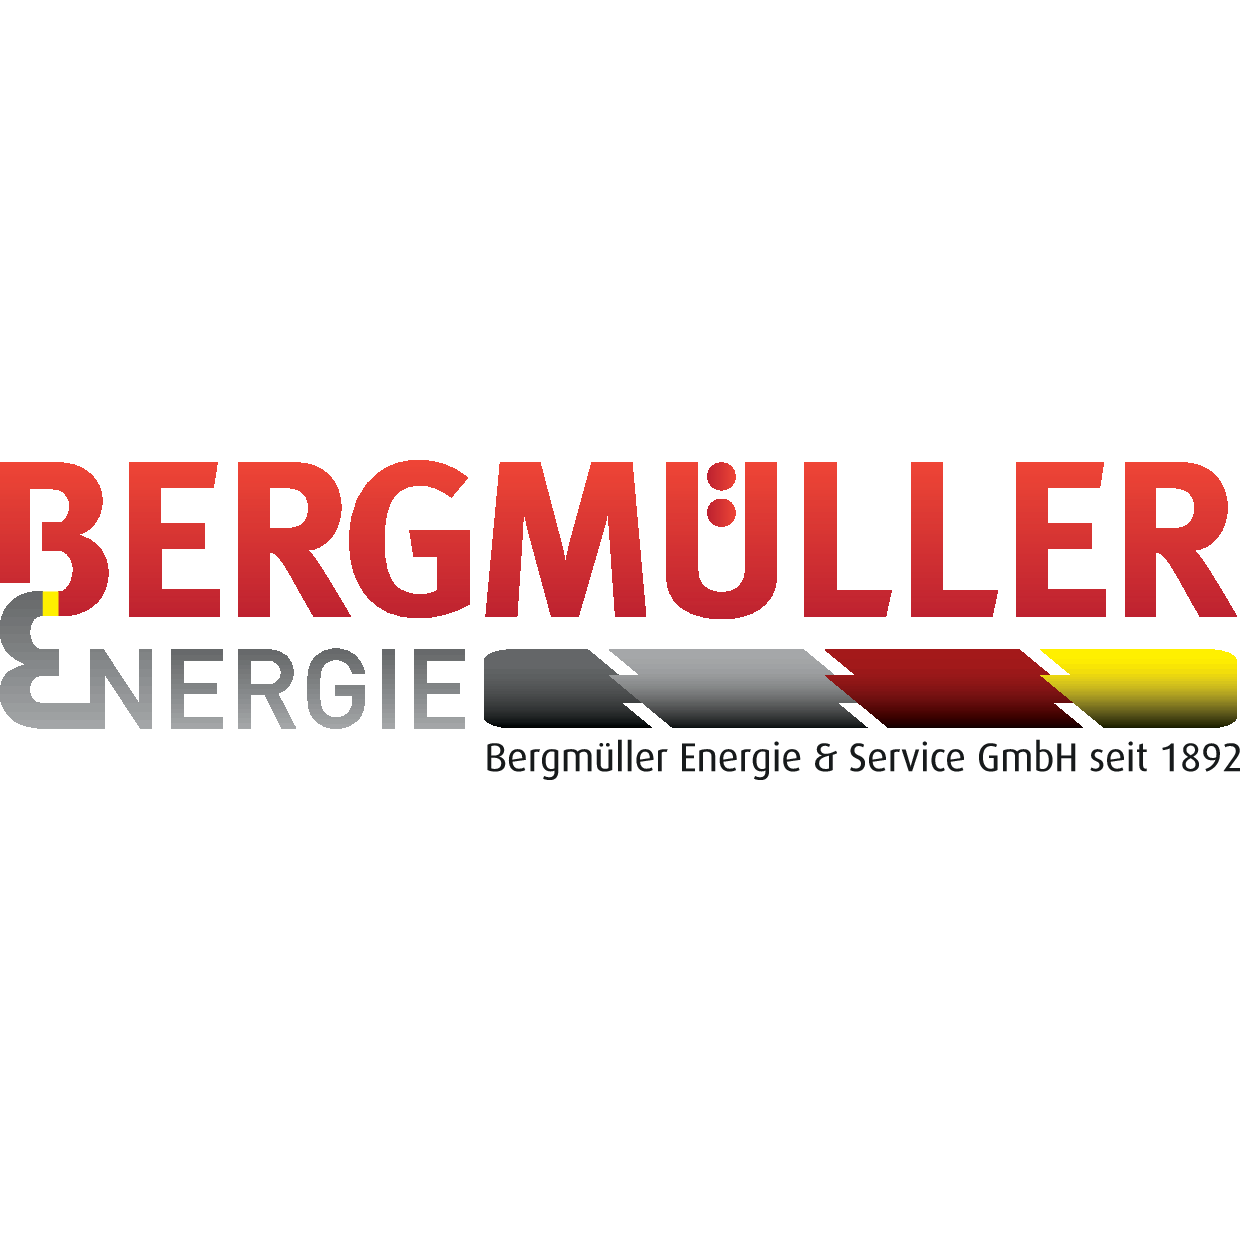 Bergmüller Energie & Service GmbH  